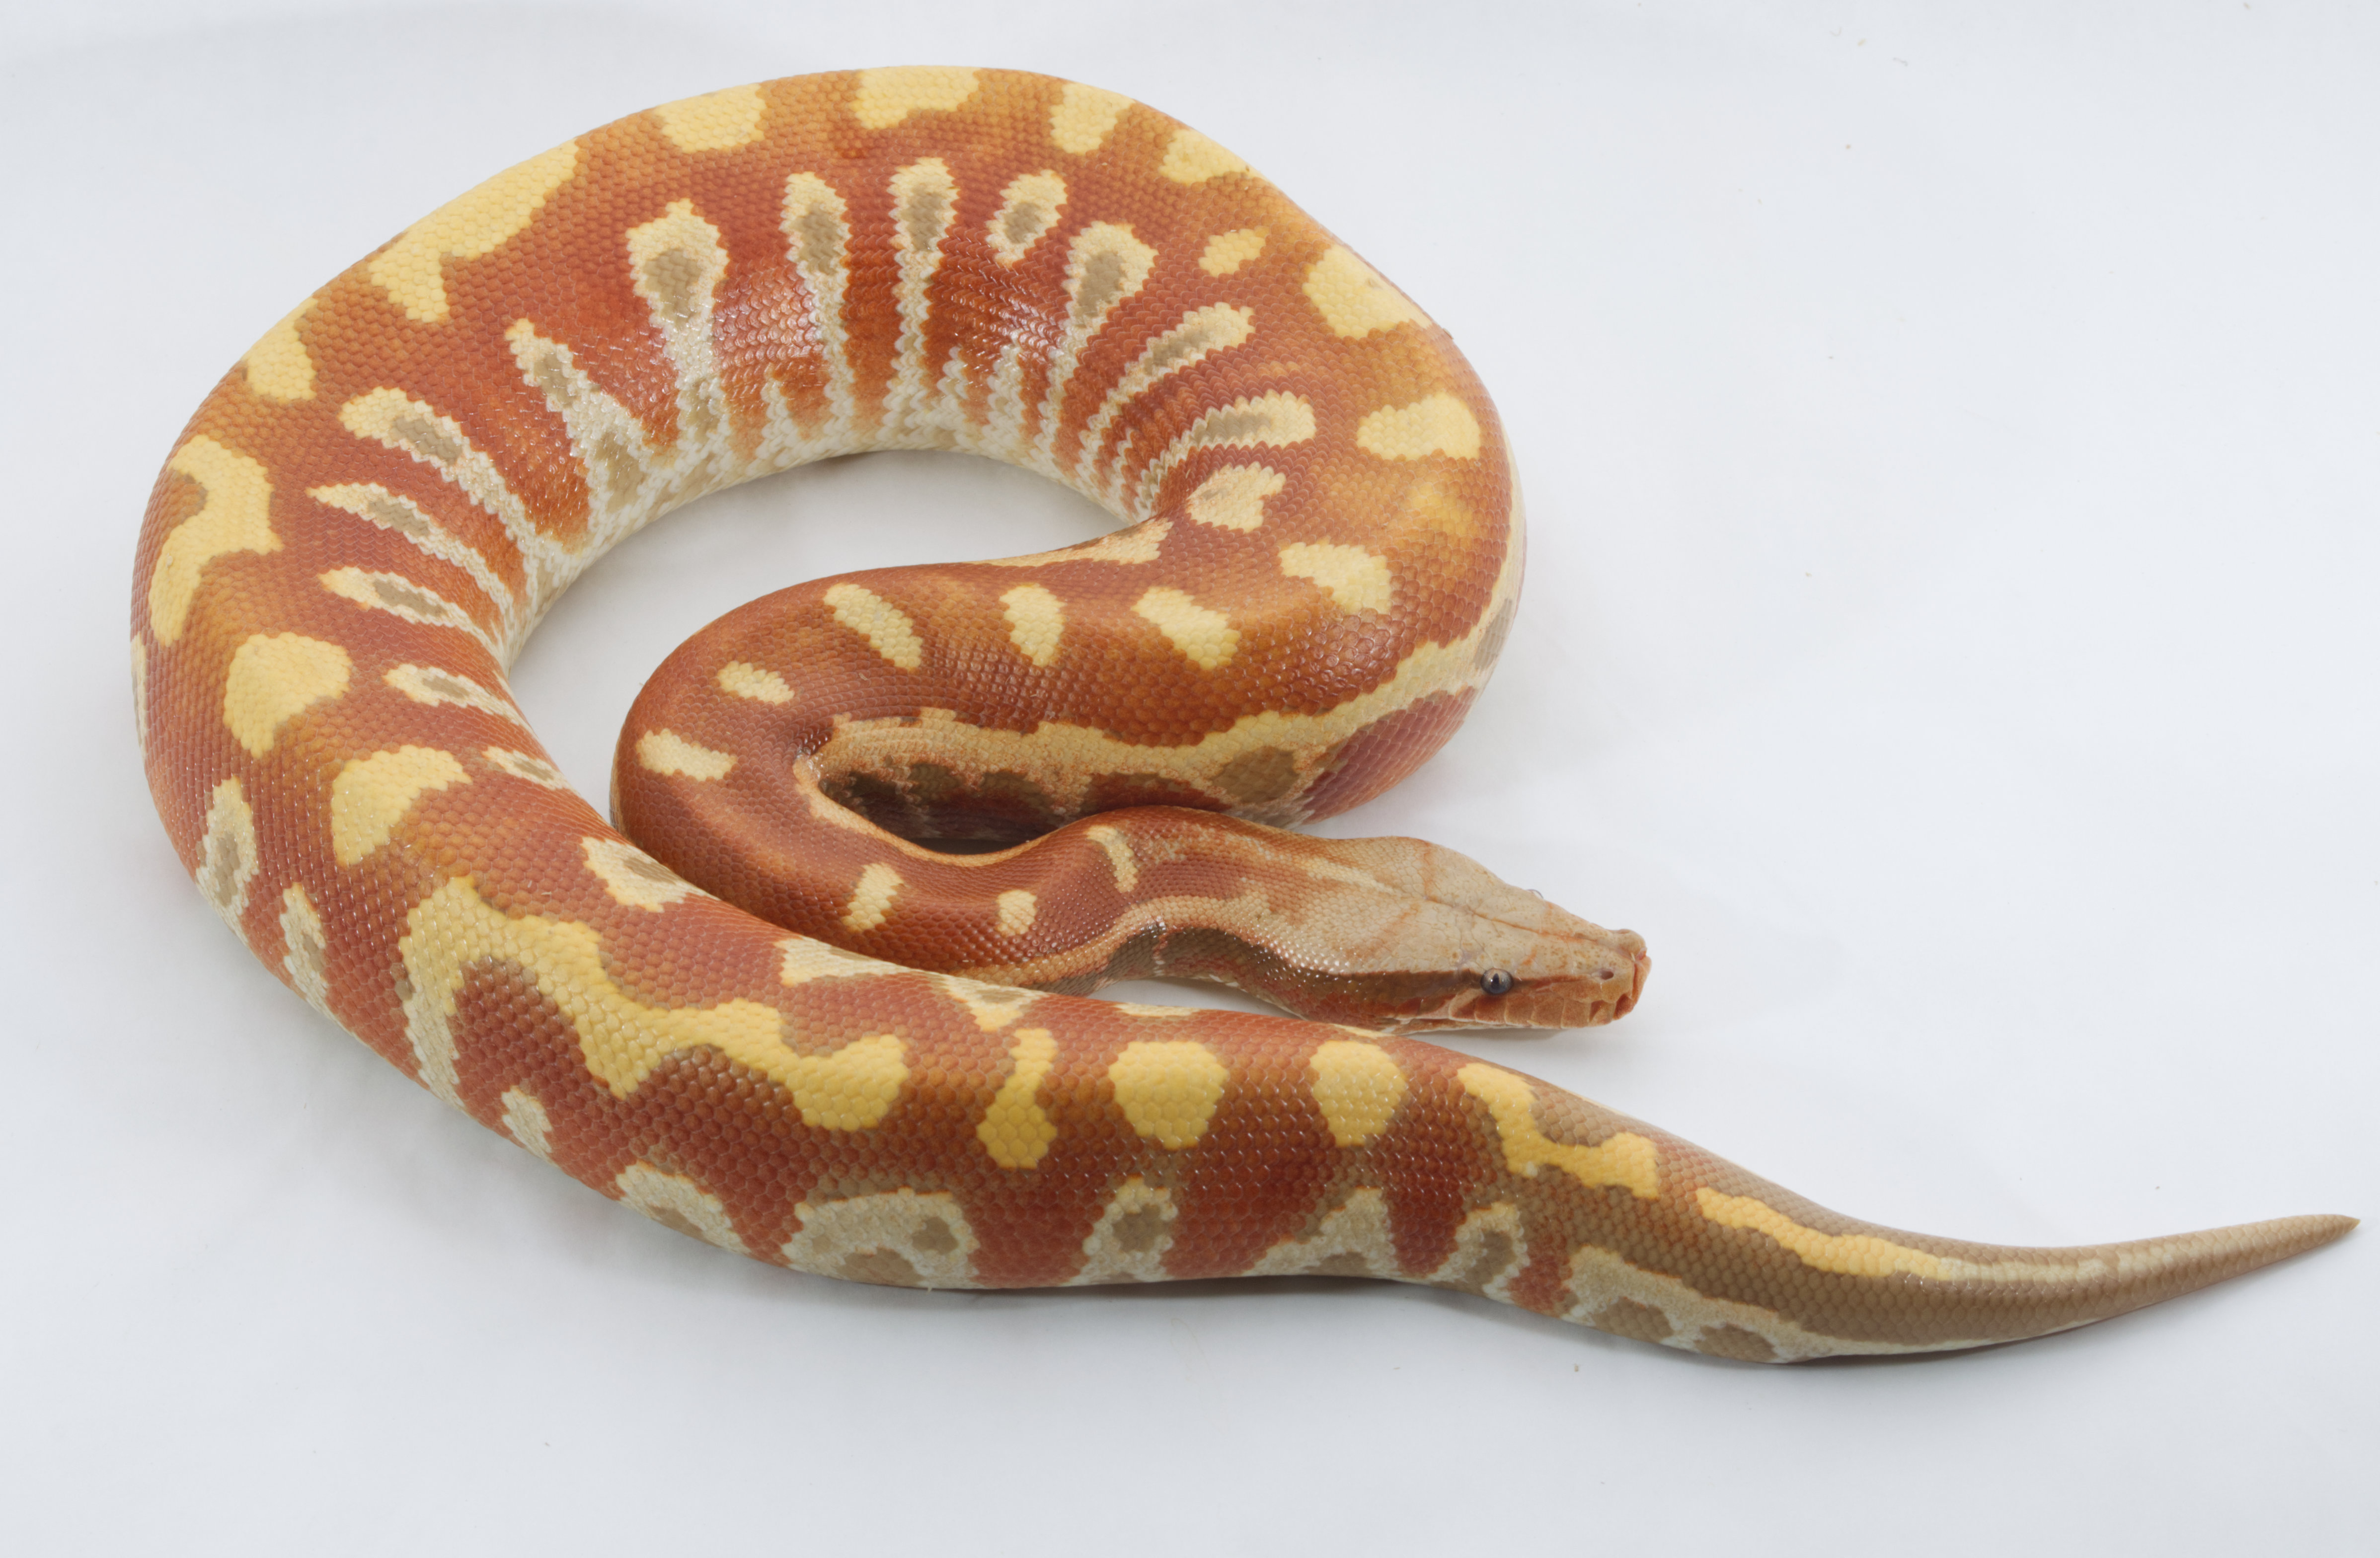 T+ Albino Blood Python by Arrowhead Serpents